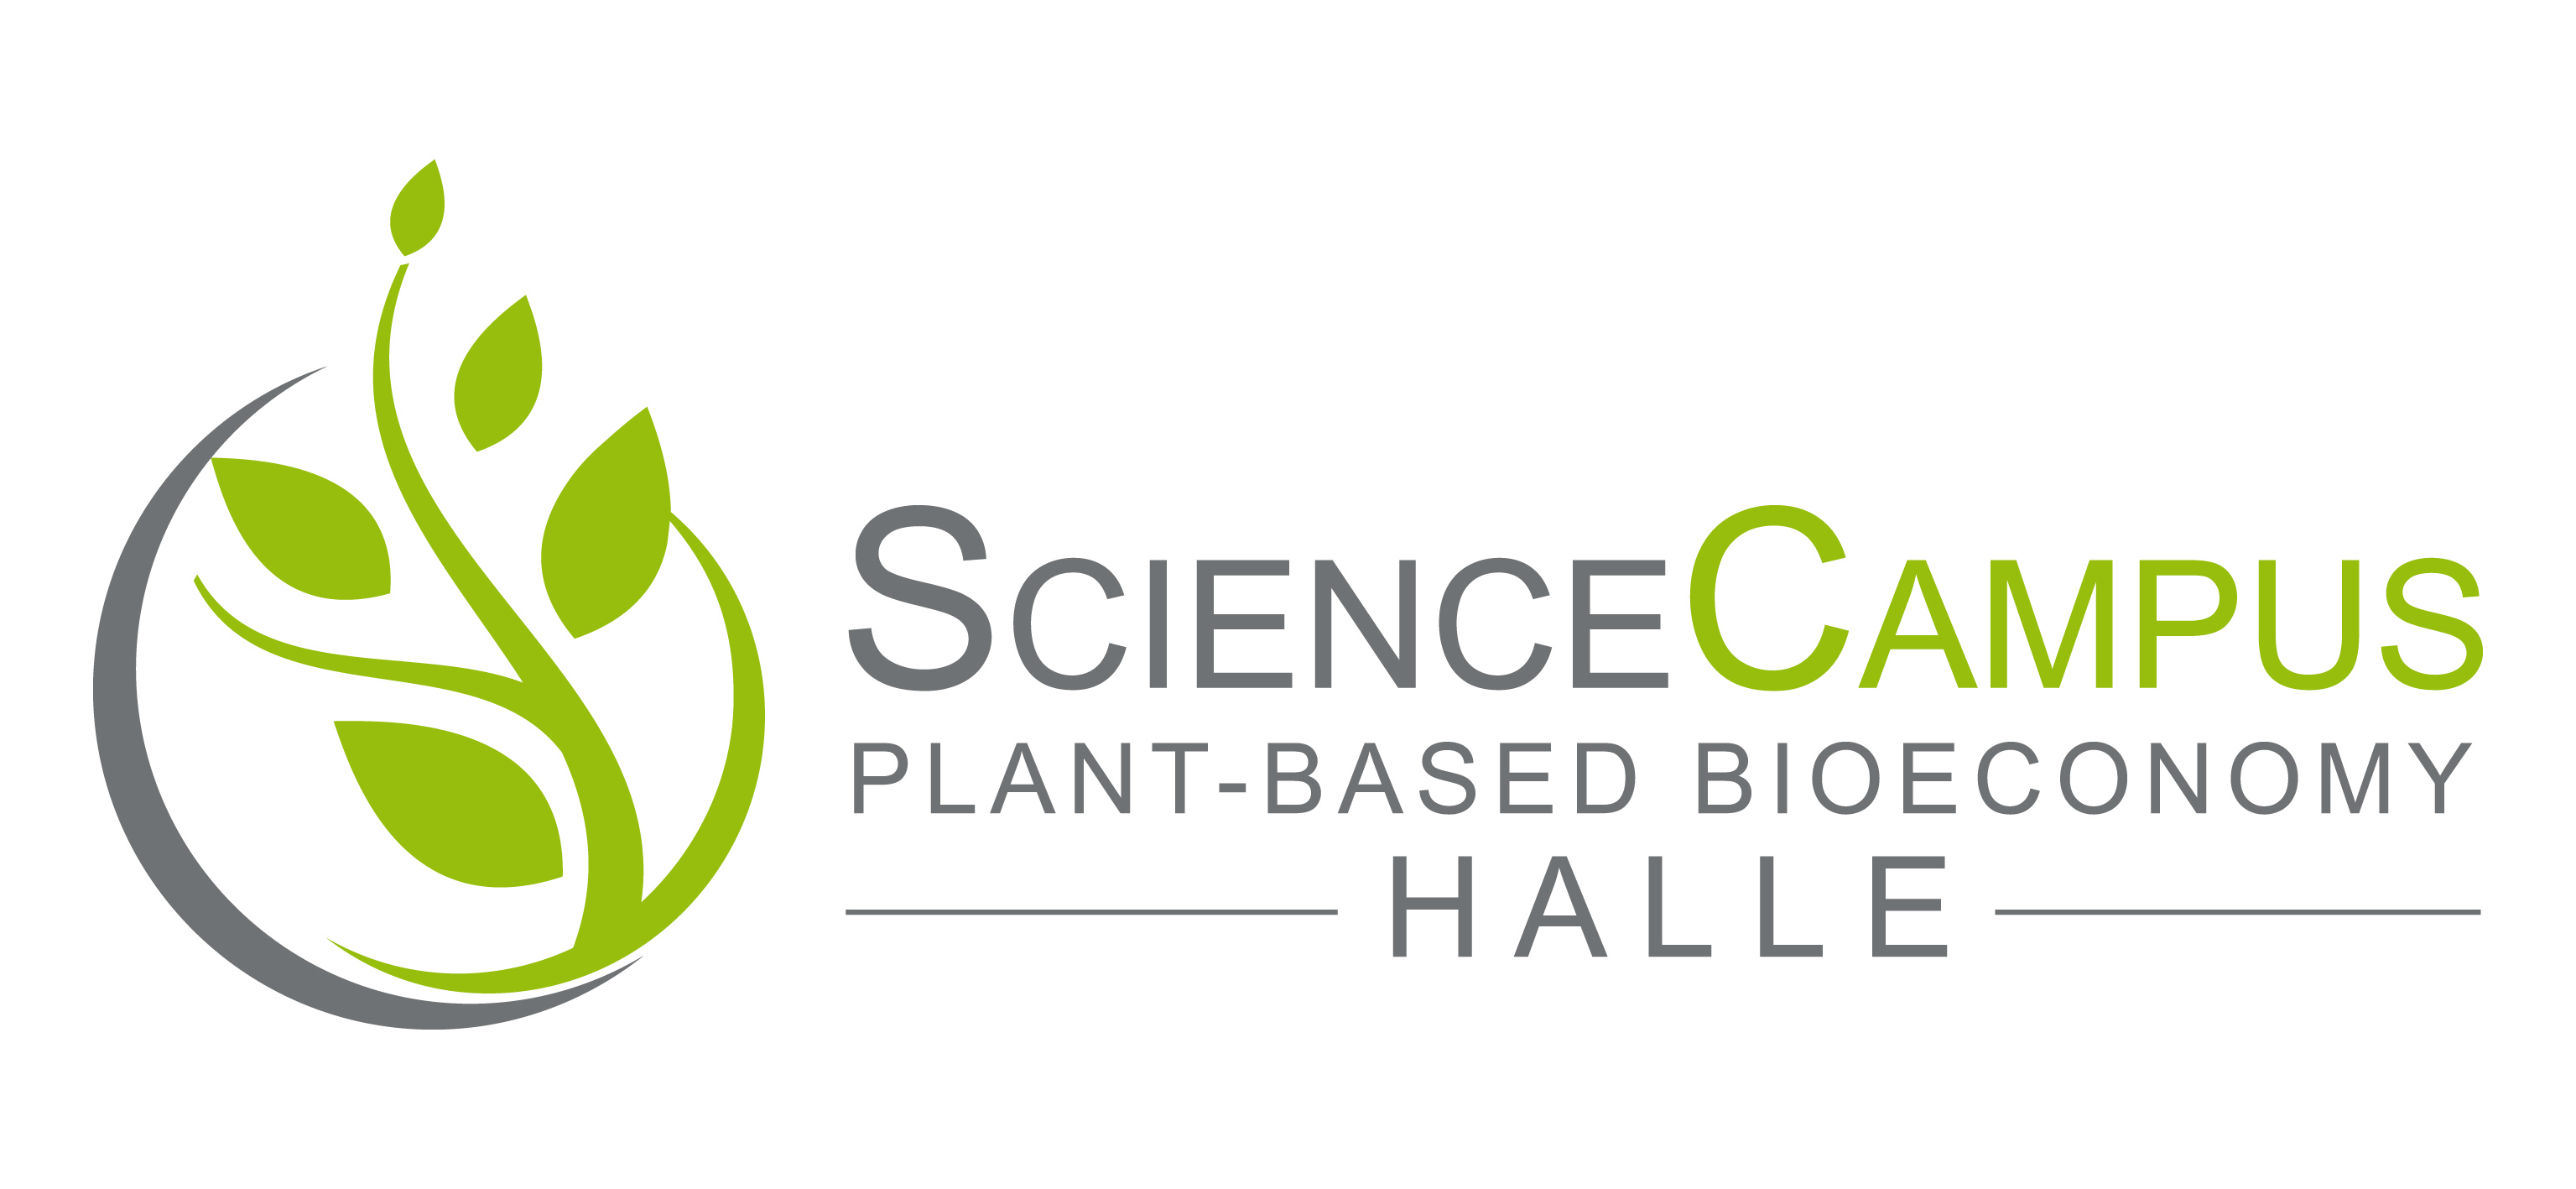 ScienceCampus Plant-Based Bioeconomy Halle